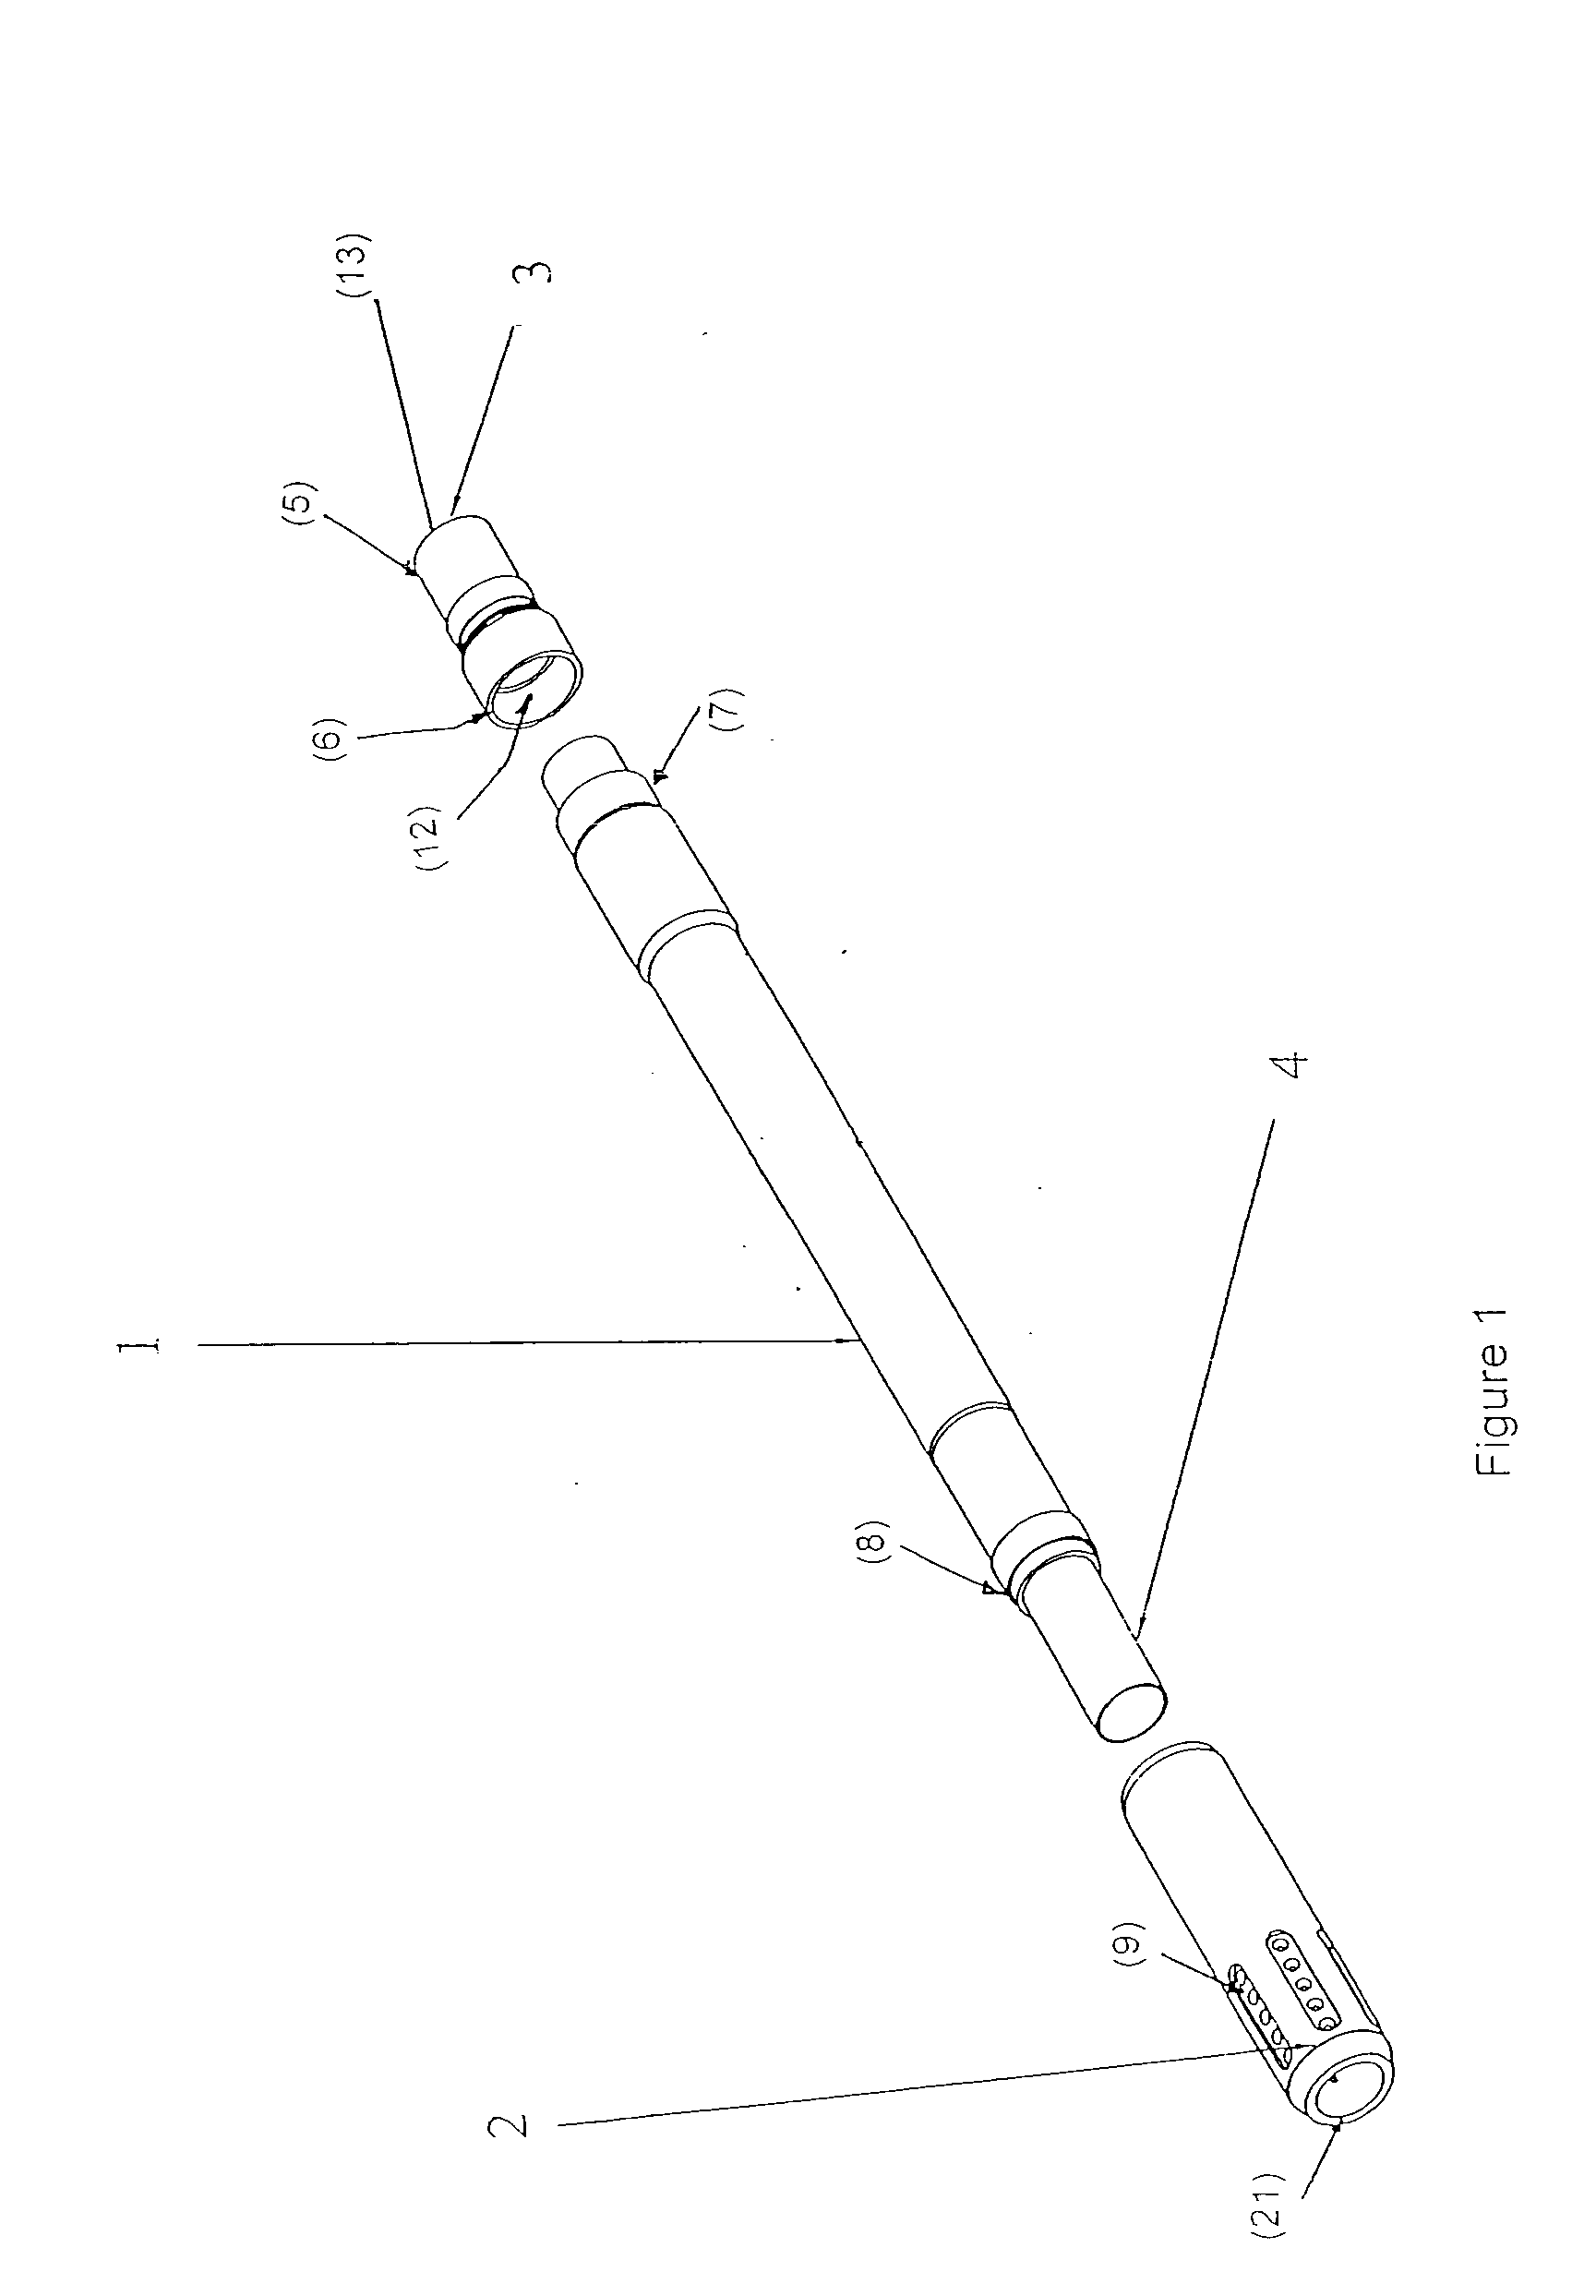 Pneumatic paintball marker, universal barrel, adaptor and insert combination